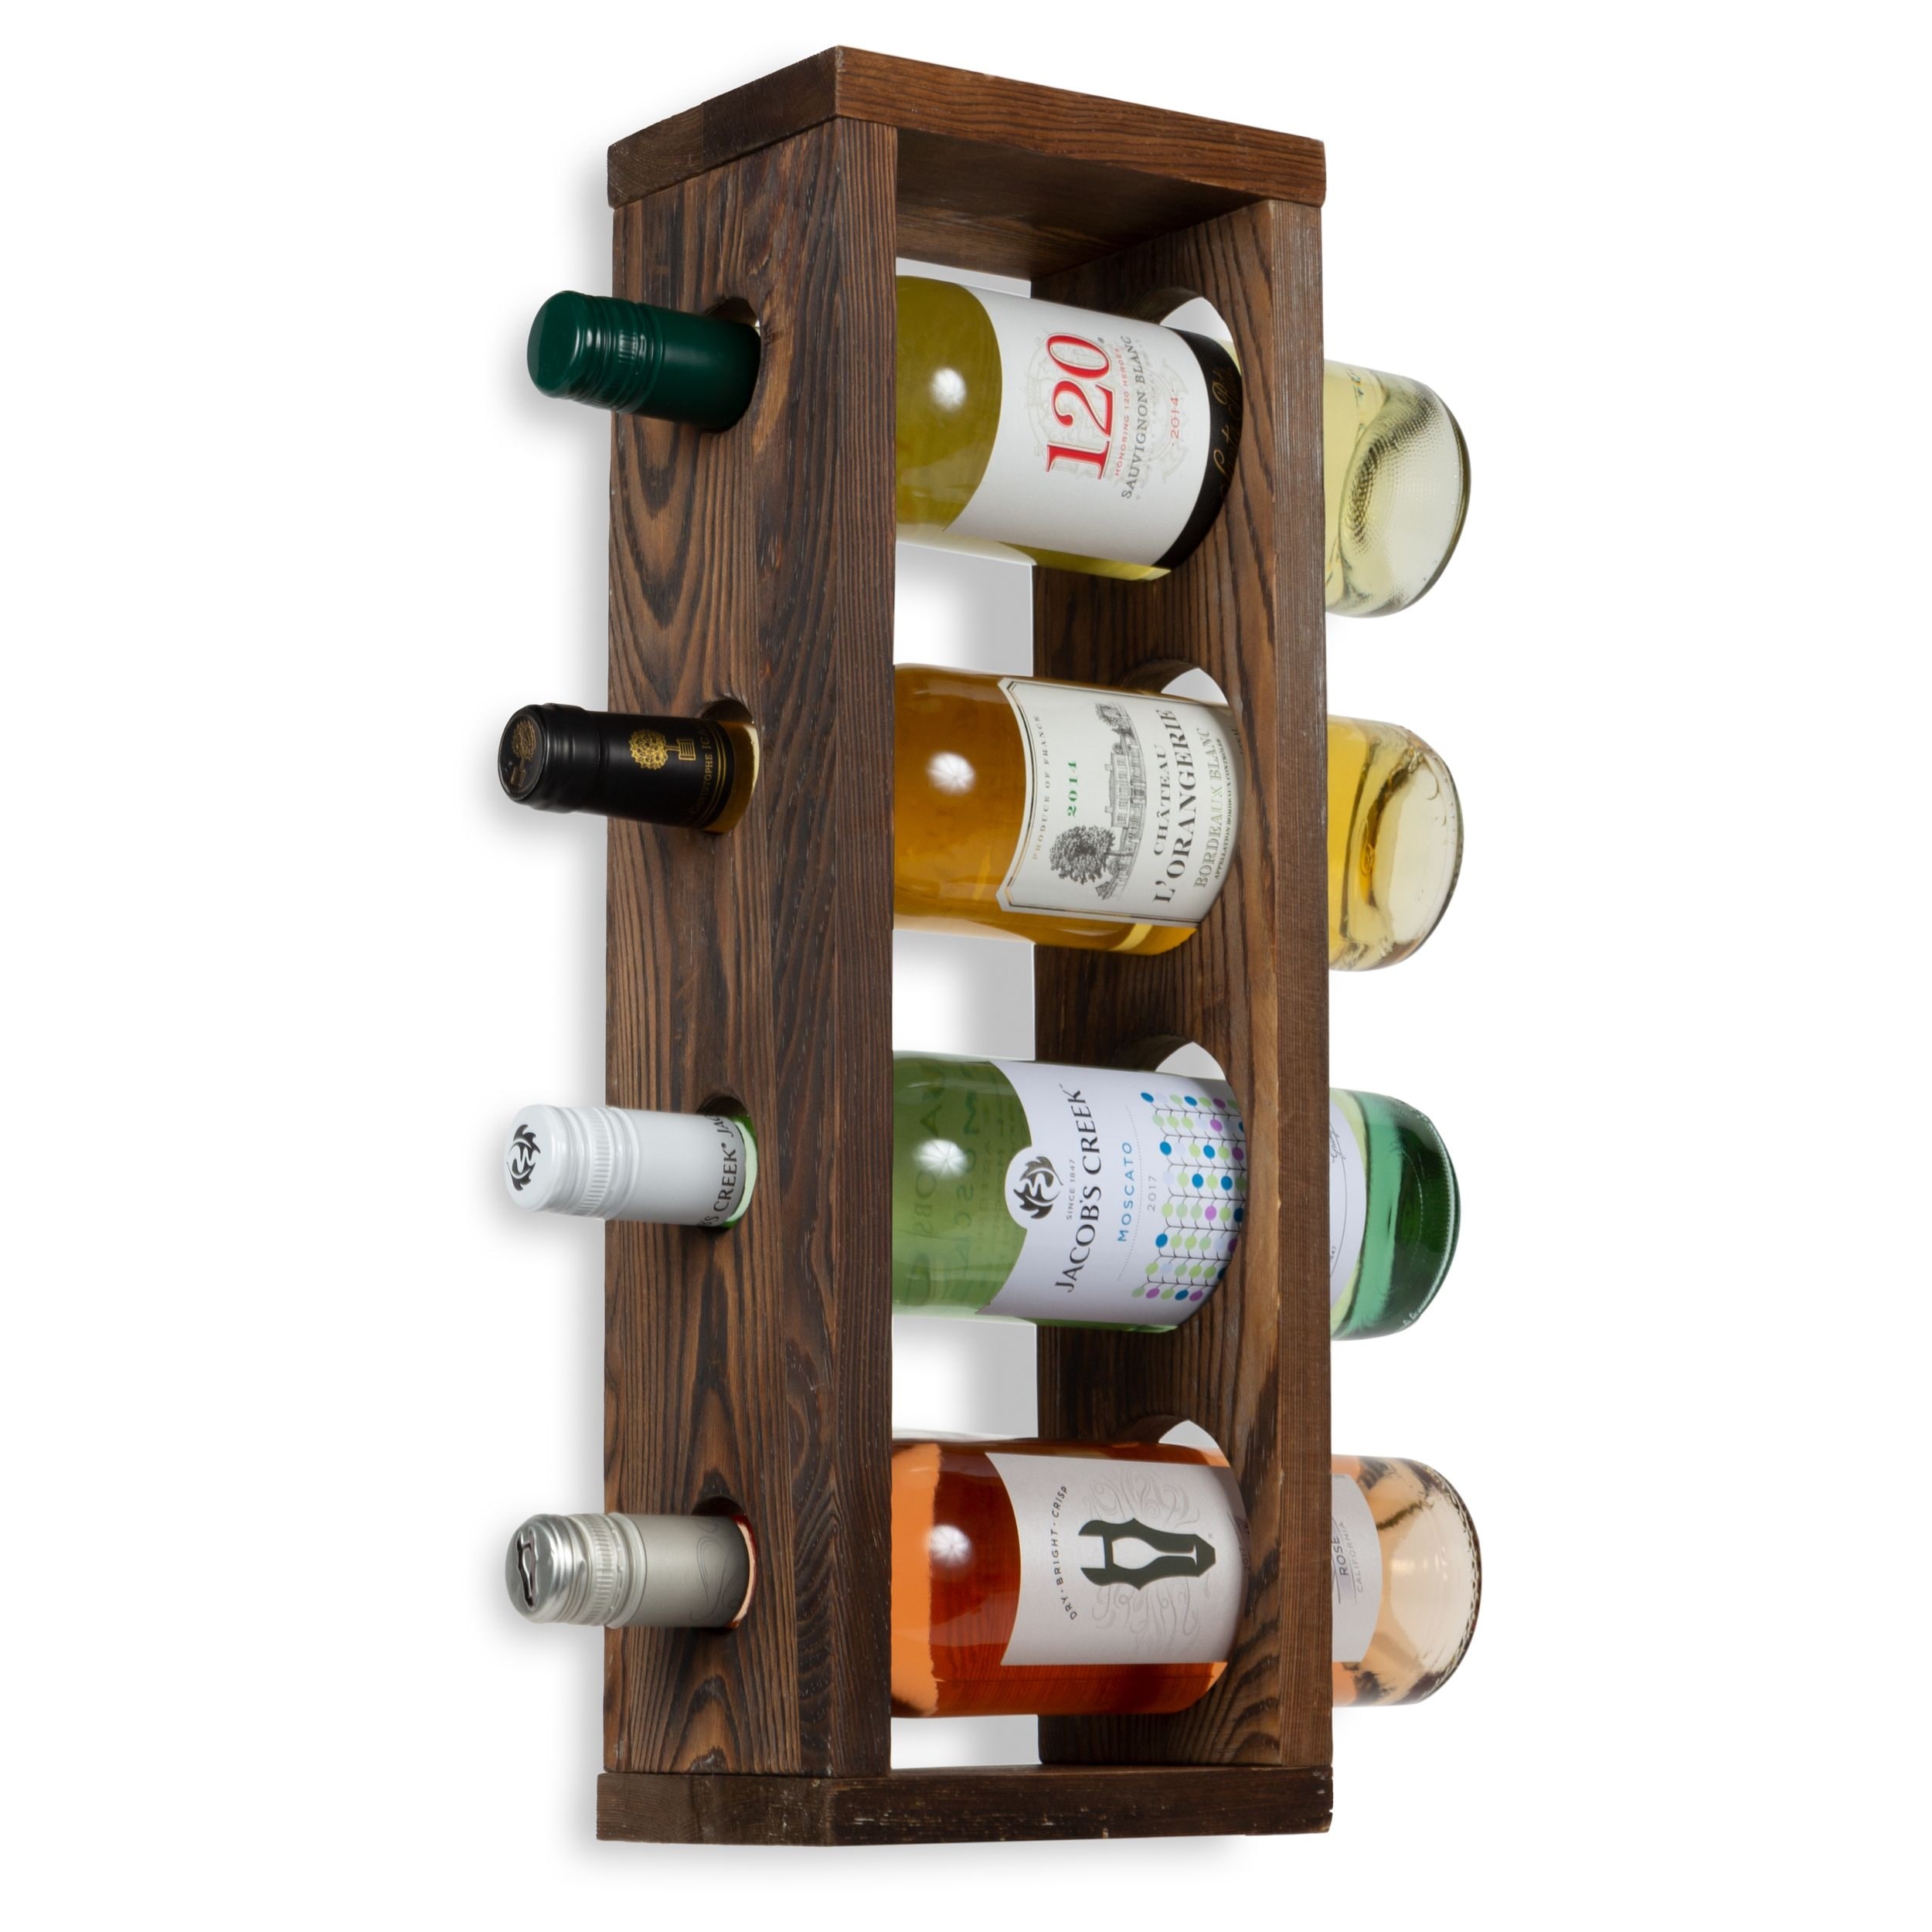 Blustoreweb™ - Wall mounted wine bottle holder